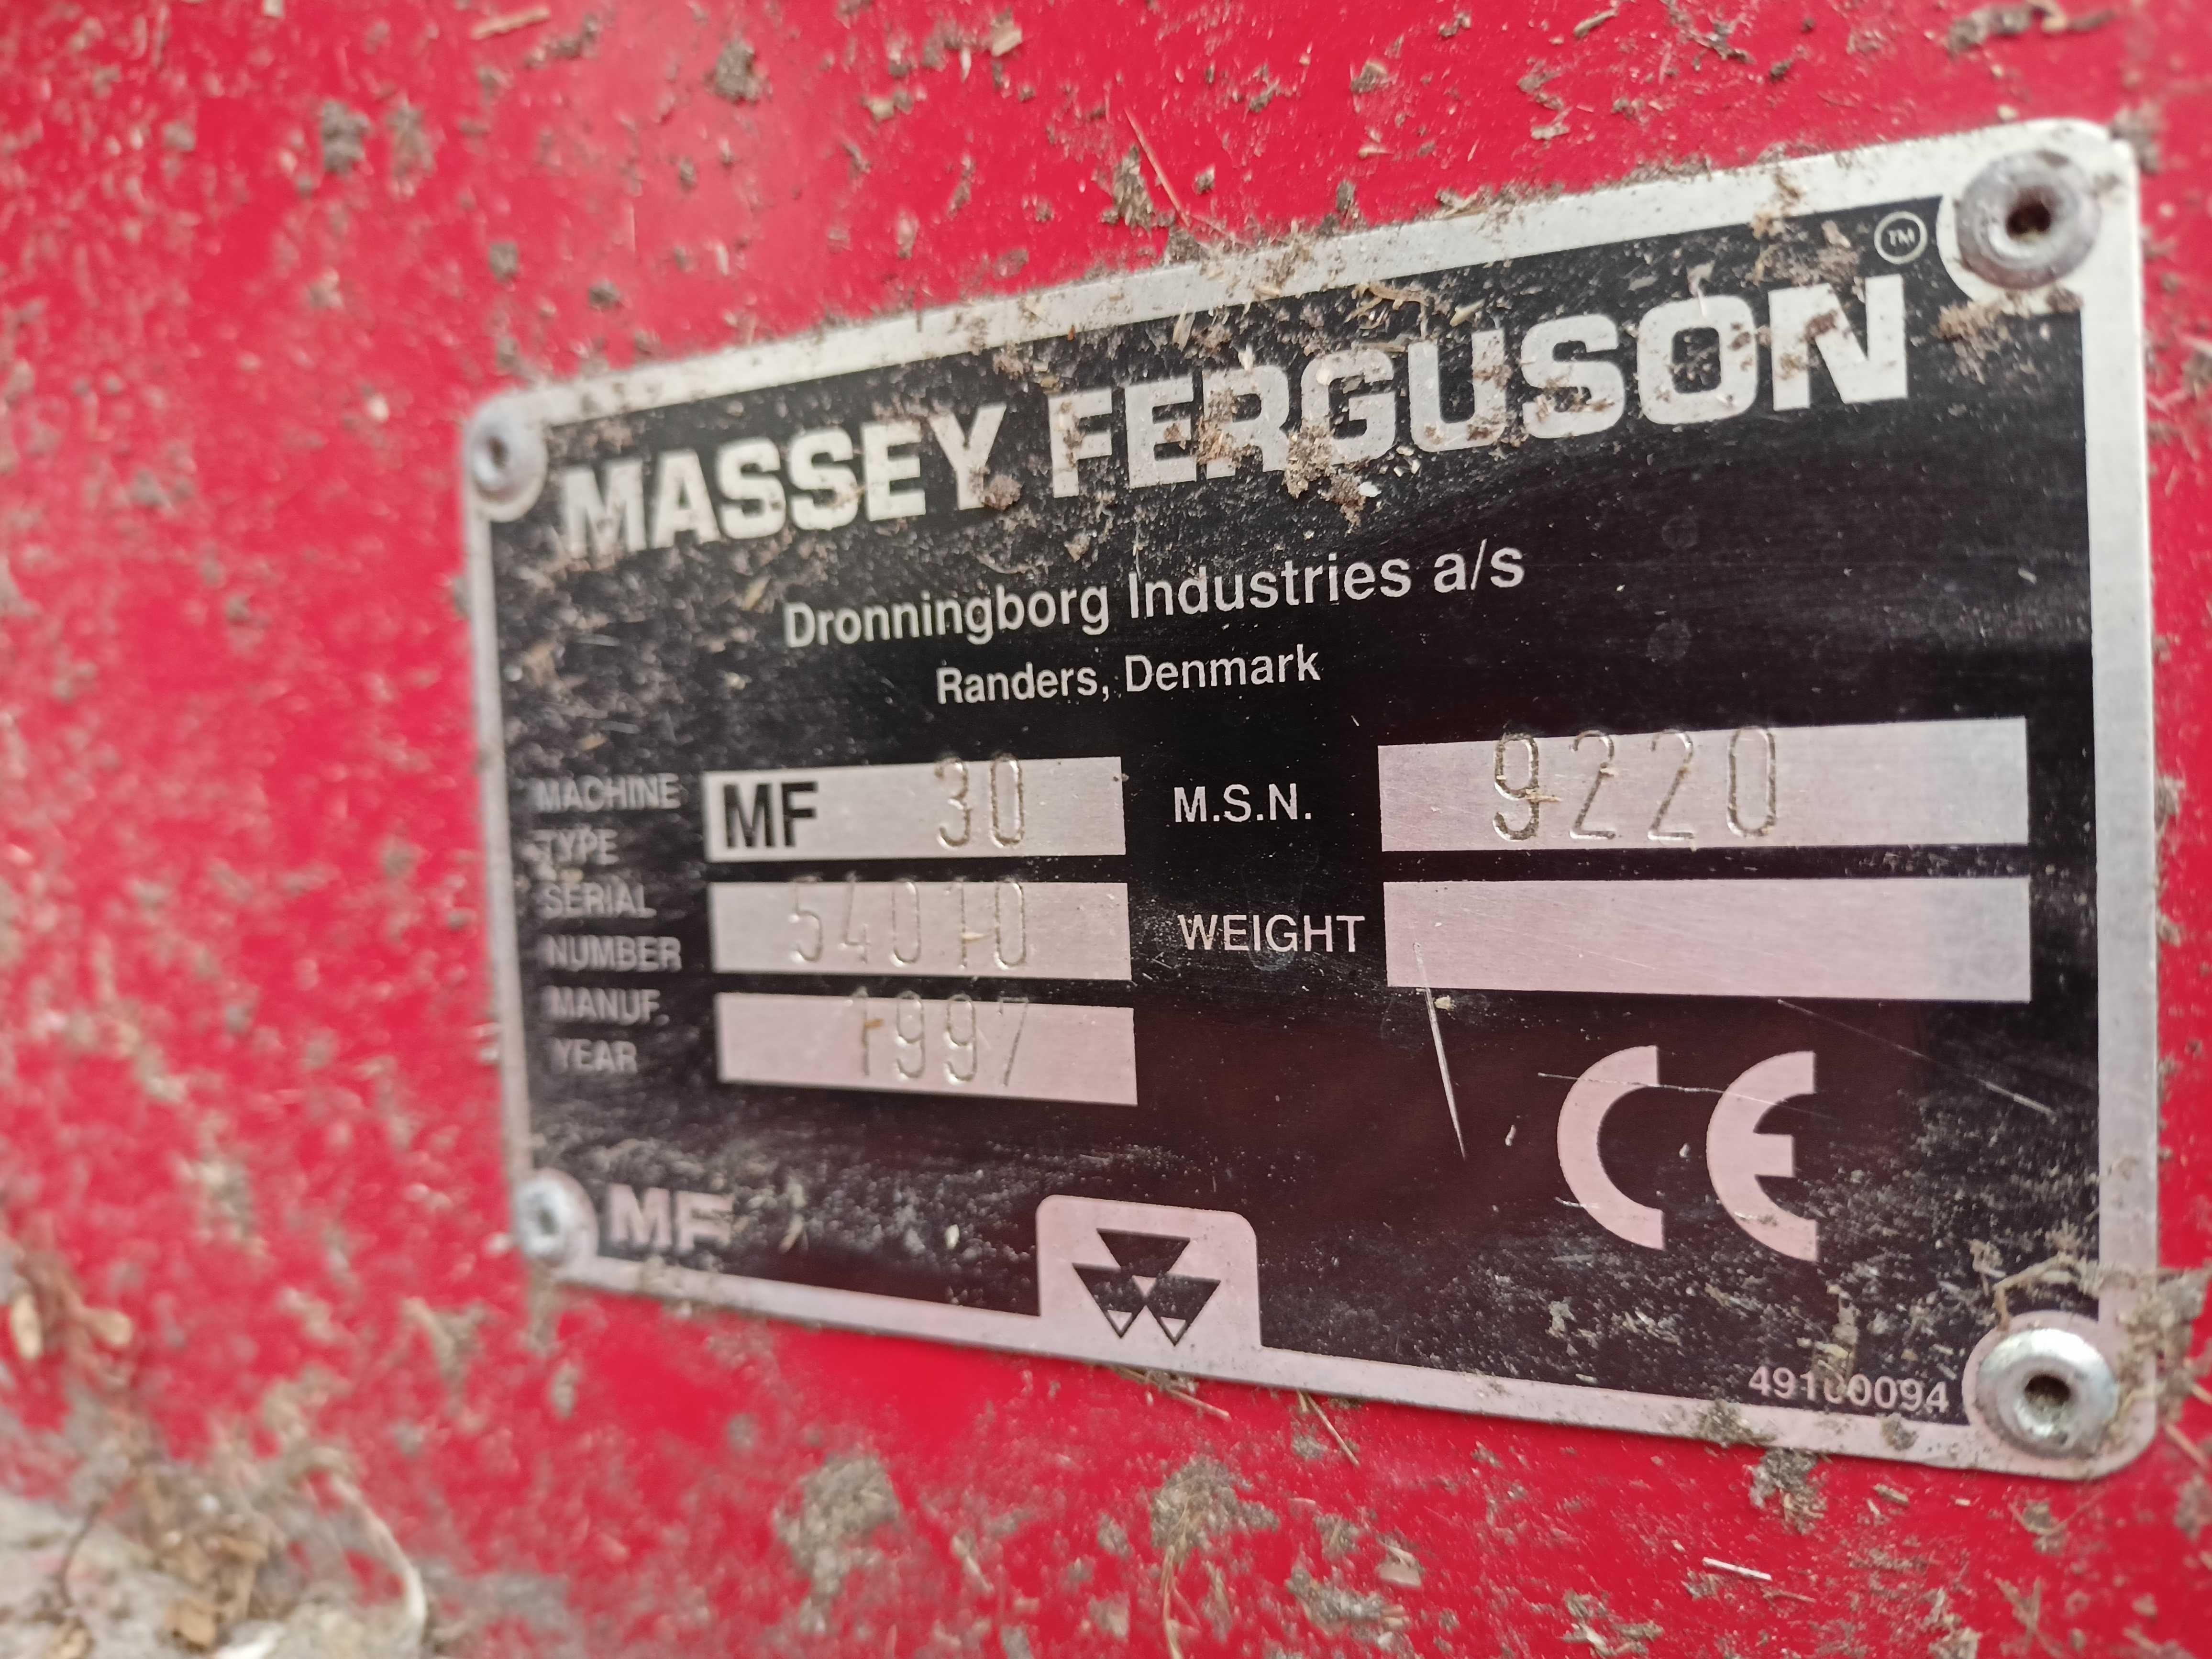 kombajn Massey Ferguson 30, heder 4.30m